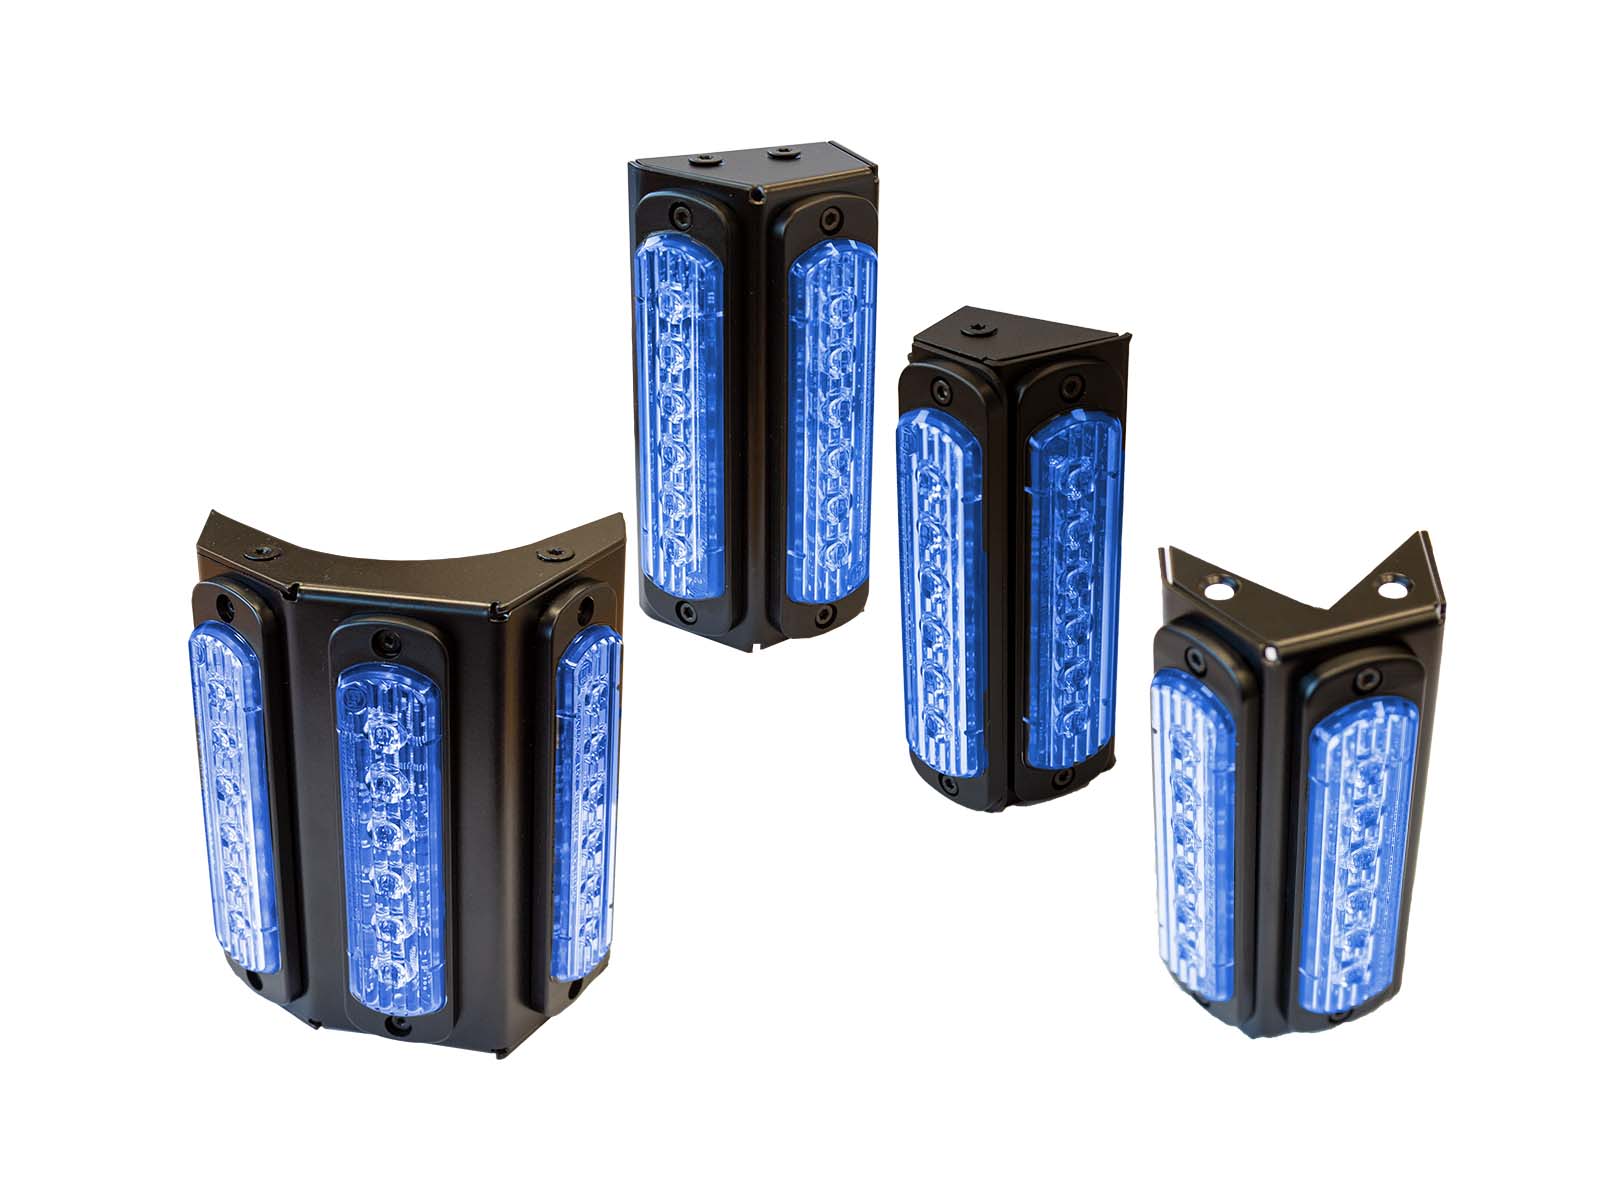 Blitzleuchte Blaues LED-Kofferset, 9 verschiedene Programme